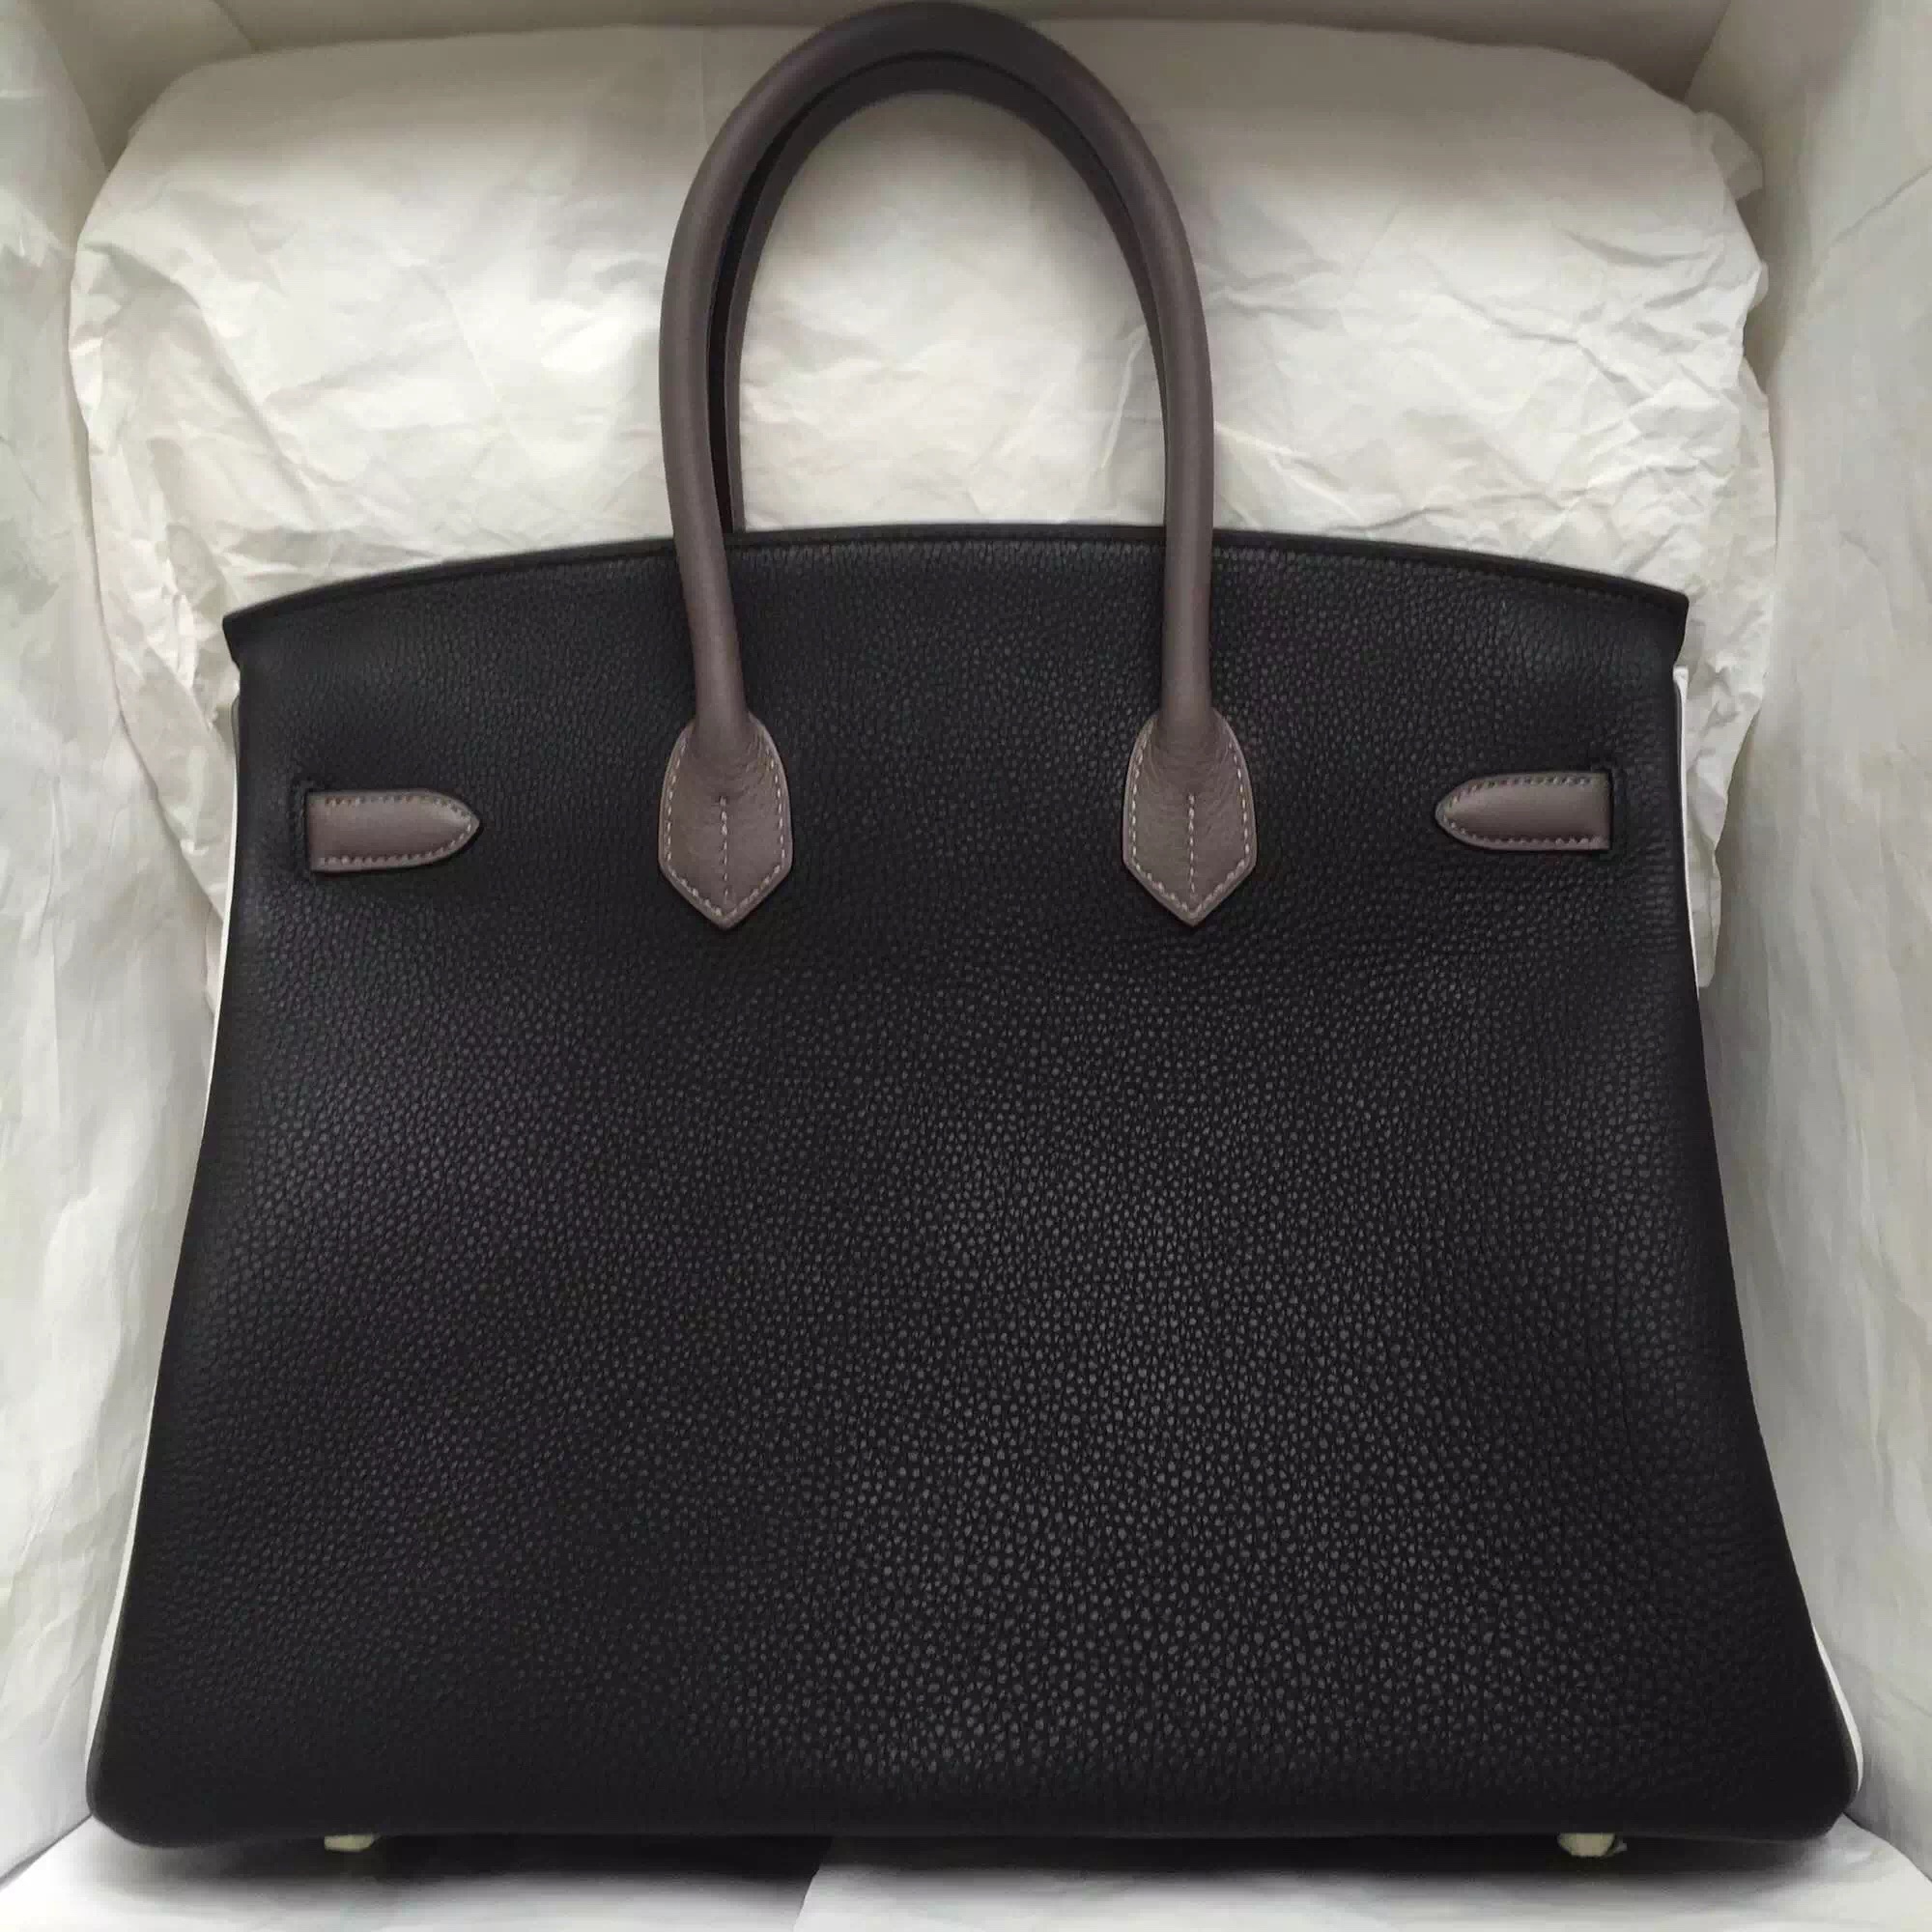 Discount Hermes Black/White/Etain Grey Togo Leather Birkin Bag 30cm Online